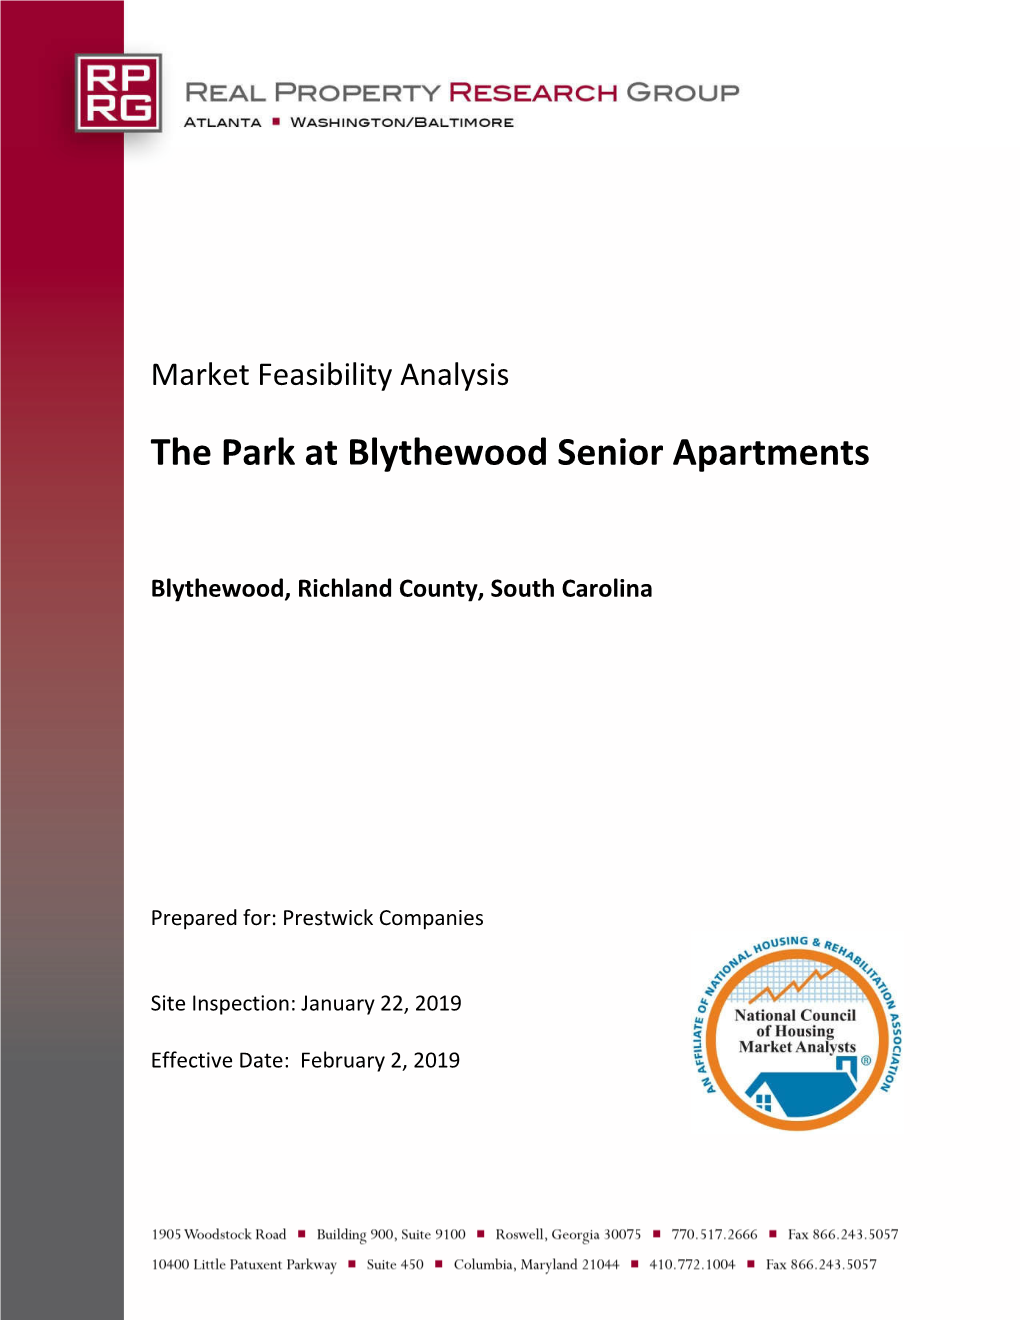 The Park at Blythewood Senior Apartments